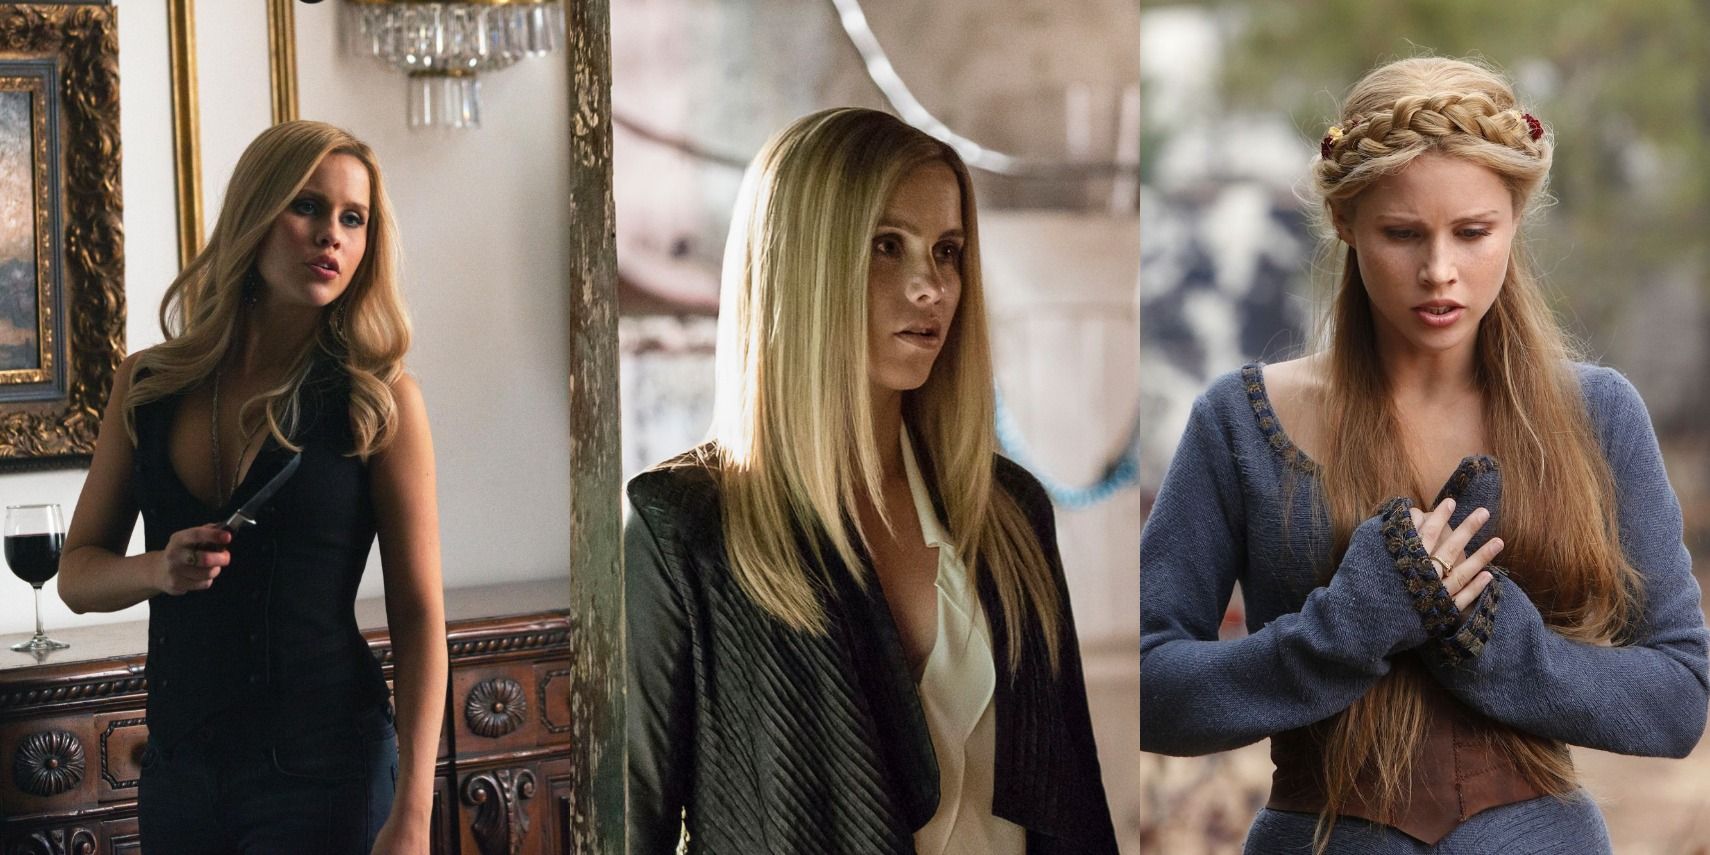 A 3-way collage of Rebekah stills